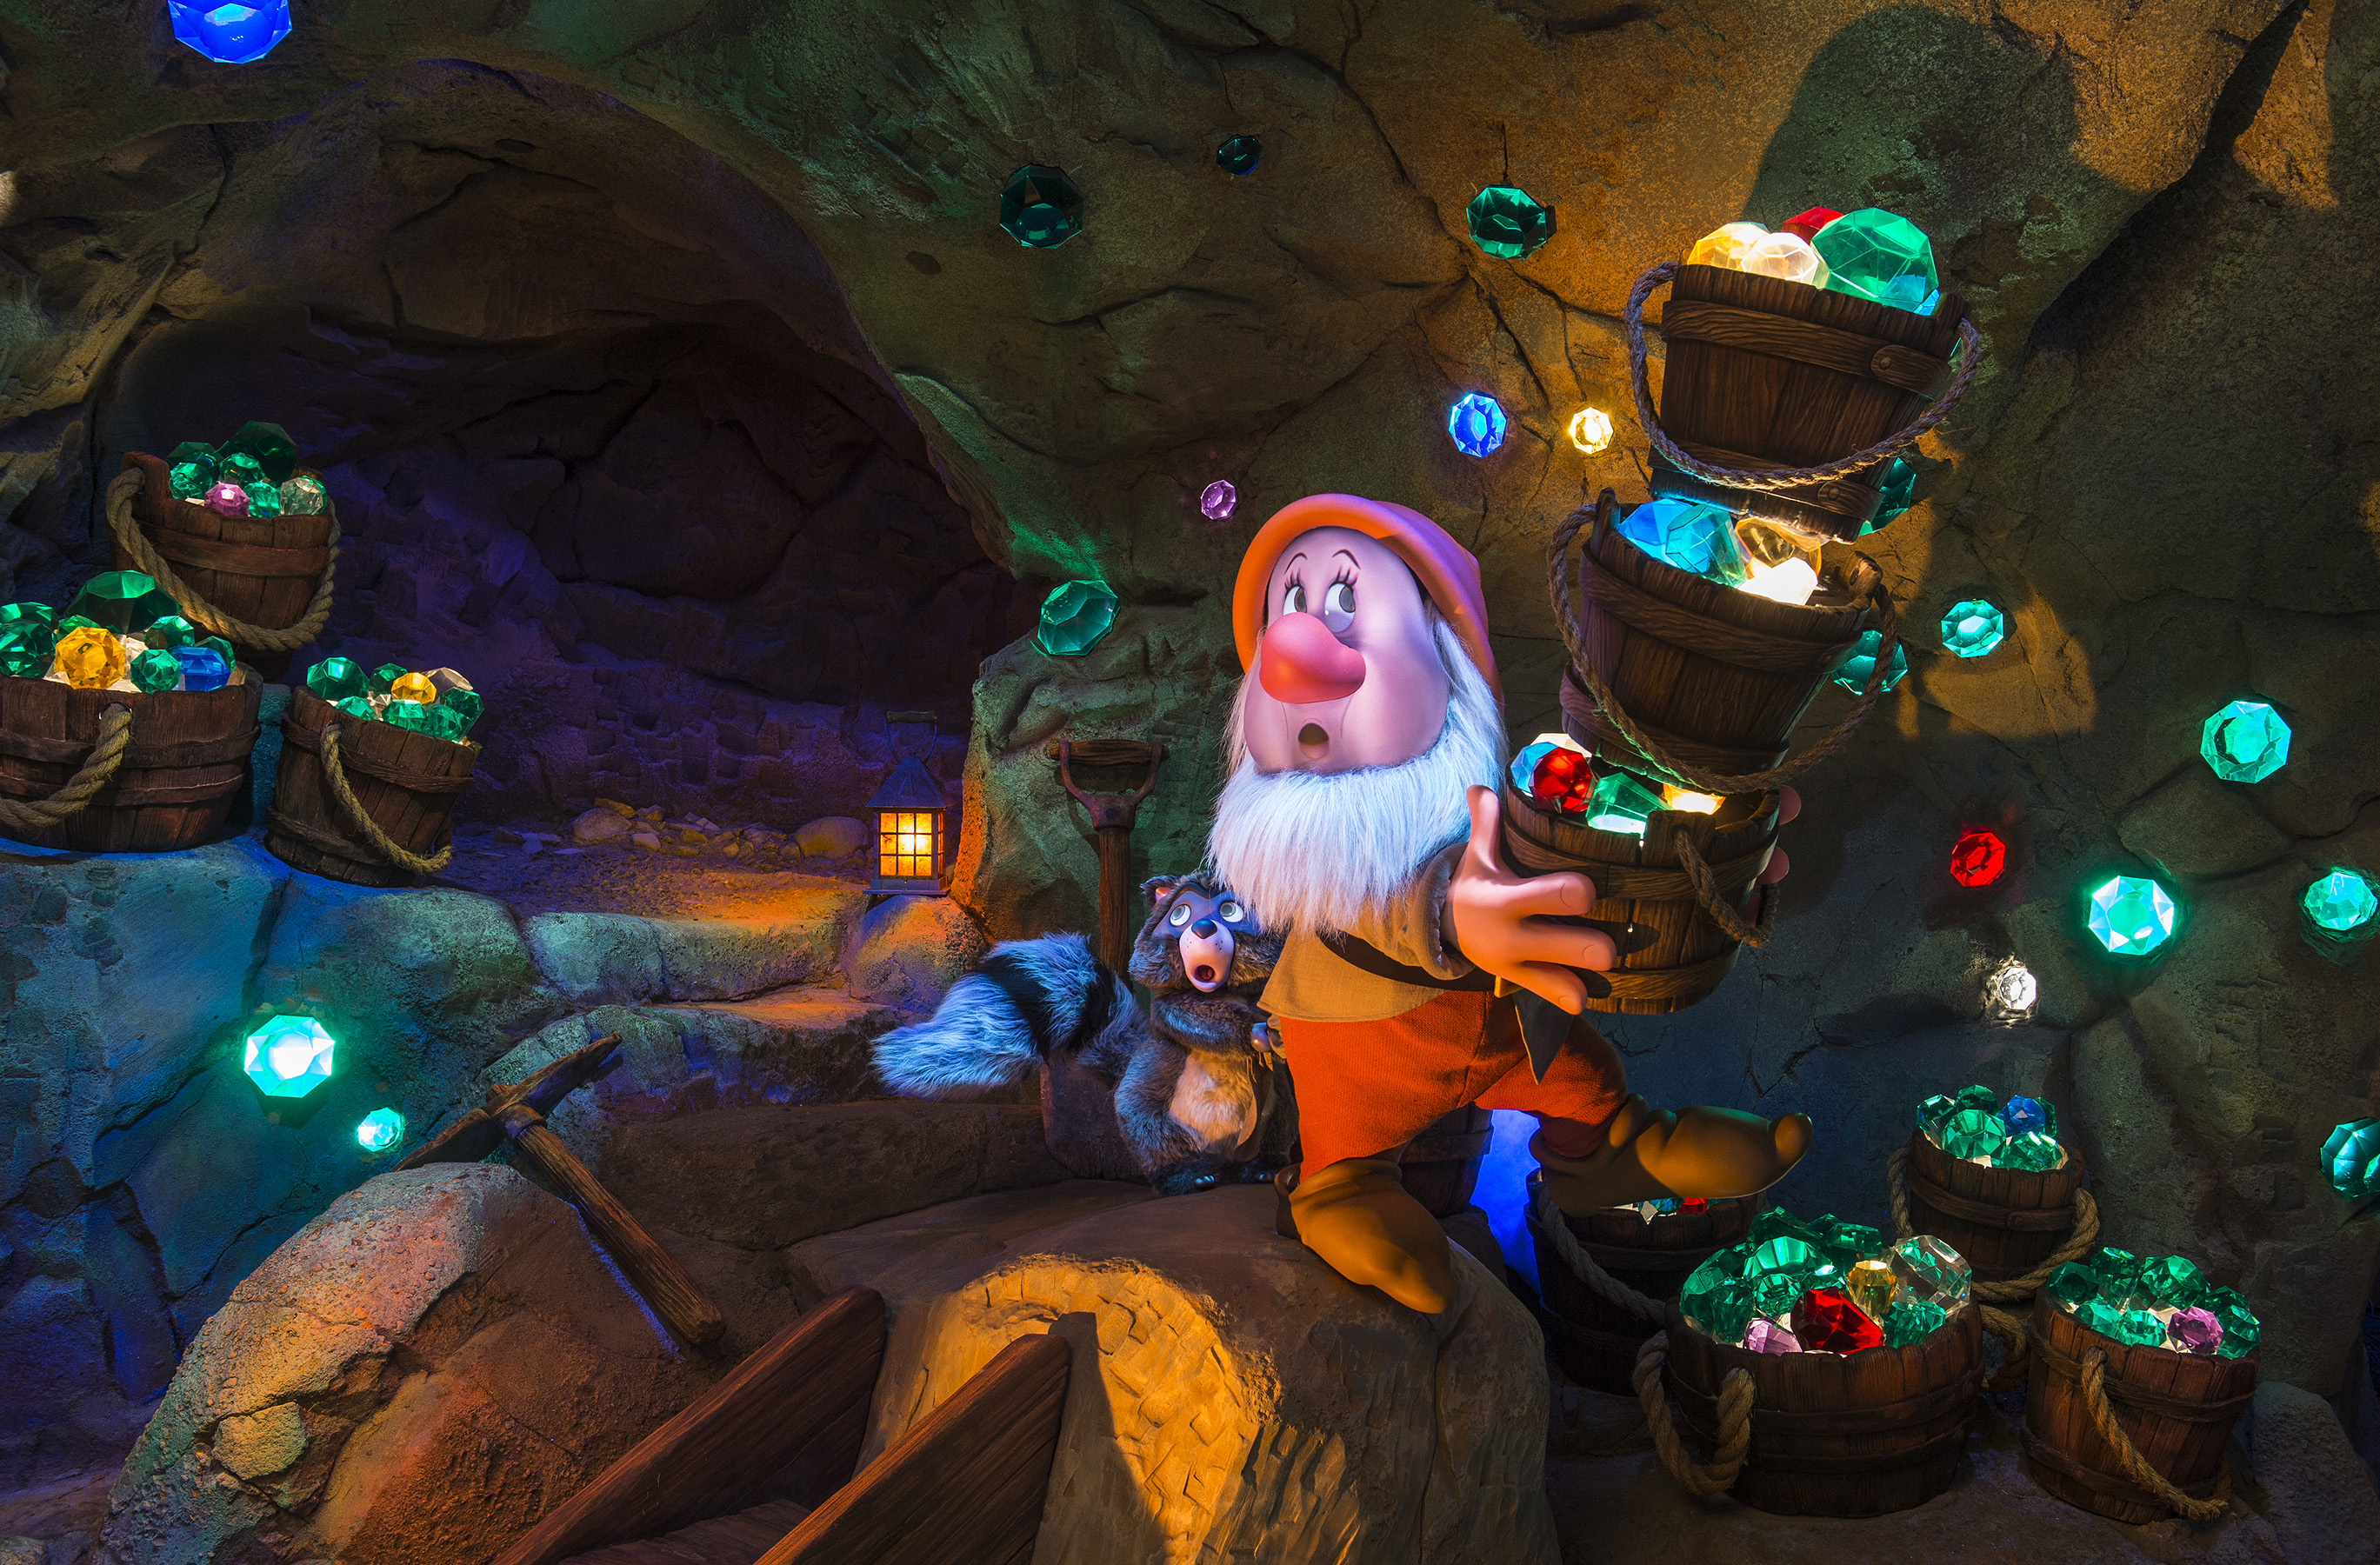 Seven Dwarfs Mine Train - Opening Date Announced